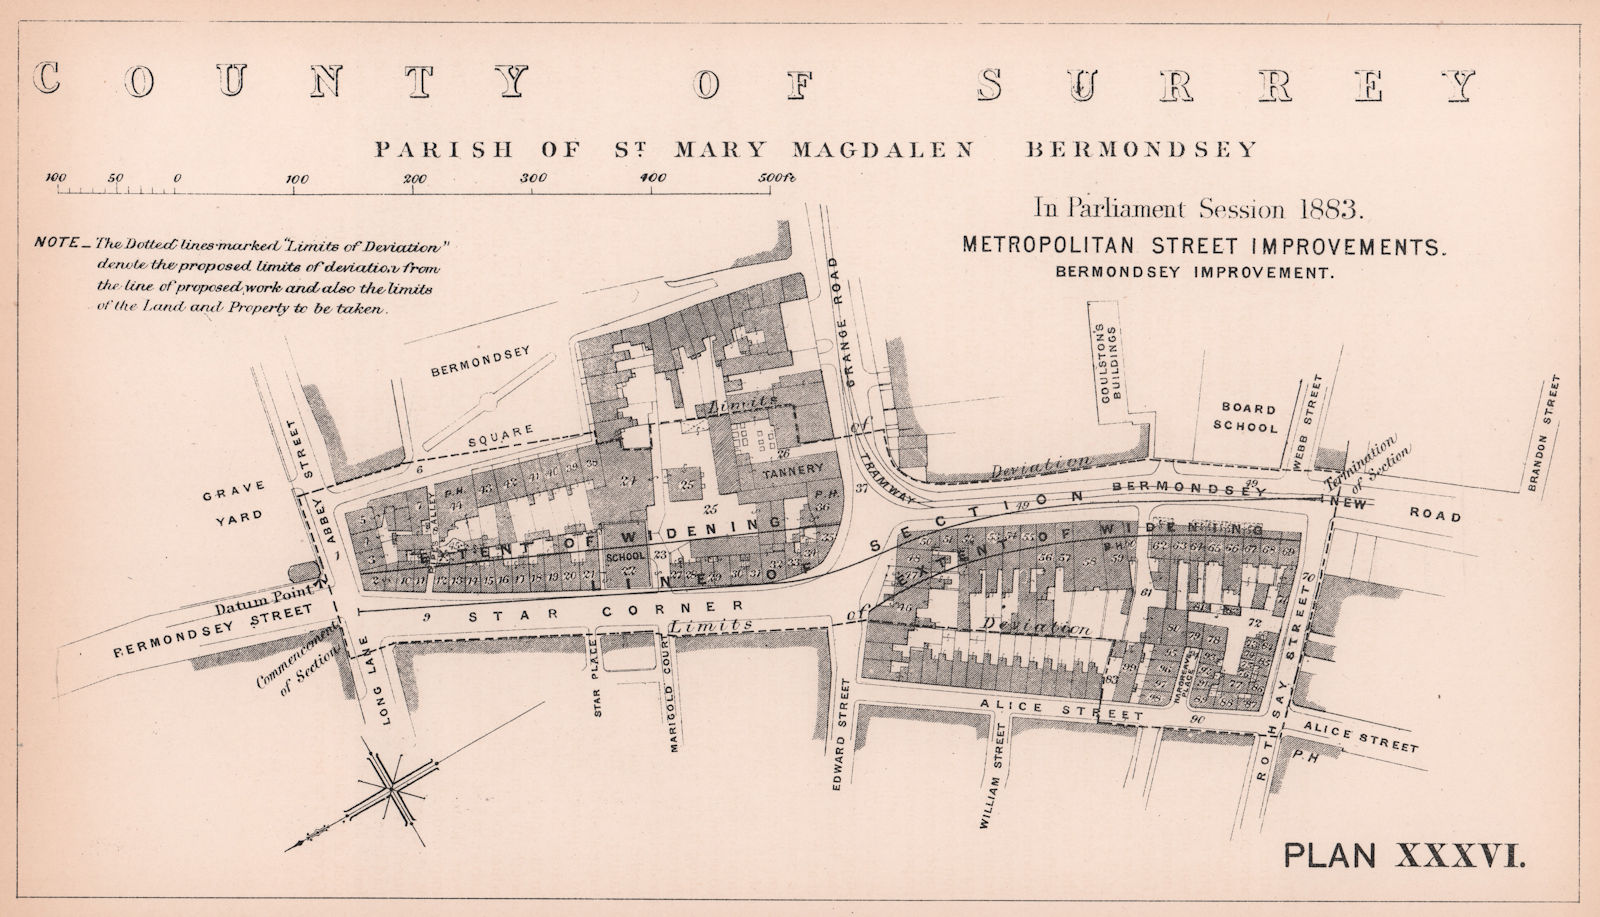 1883 Bermondsey Street. Tower Bridge Road widening. Abbey St-Rothsay St 1898 map